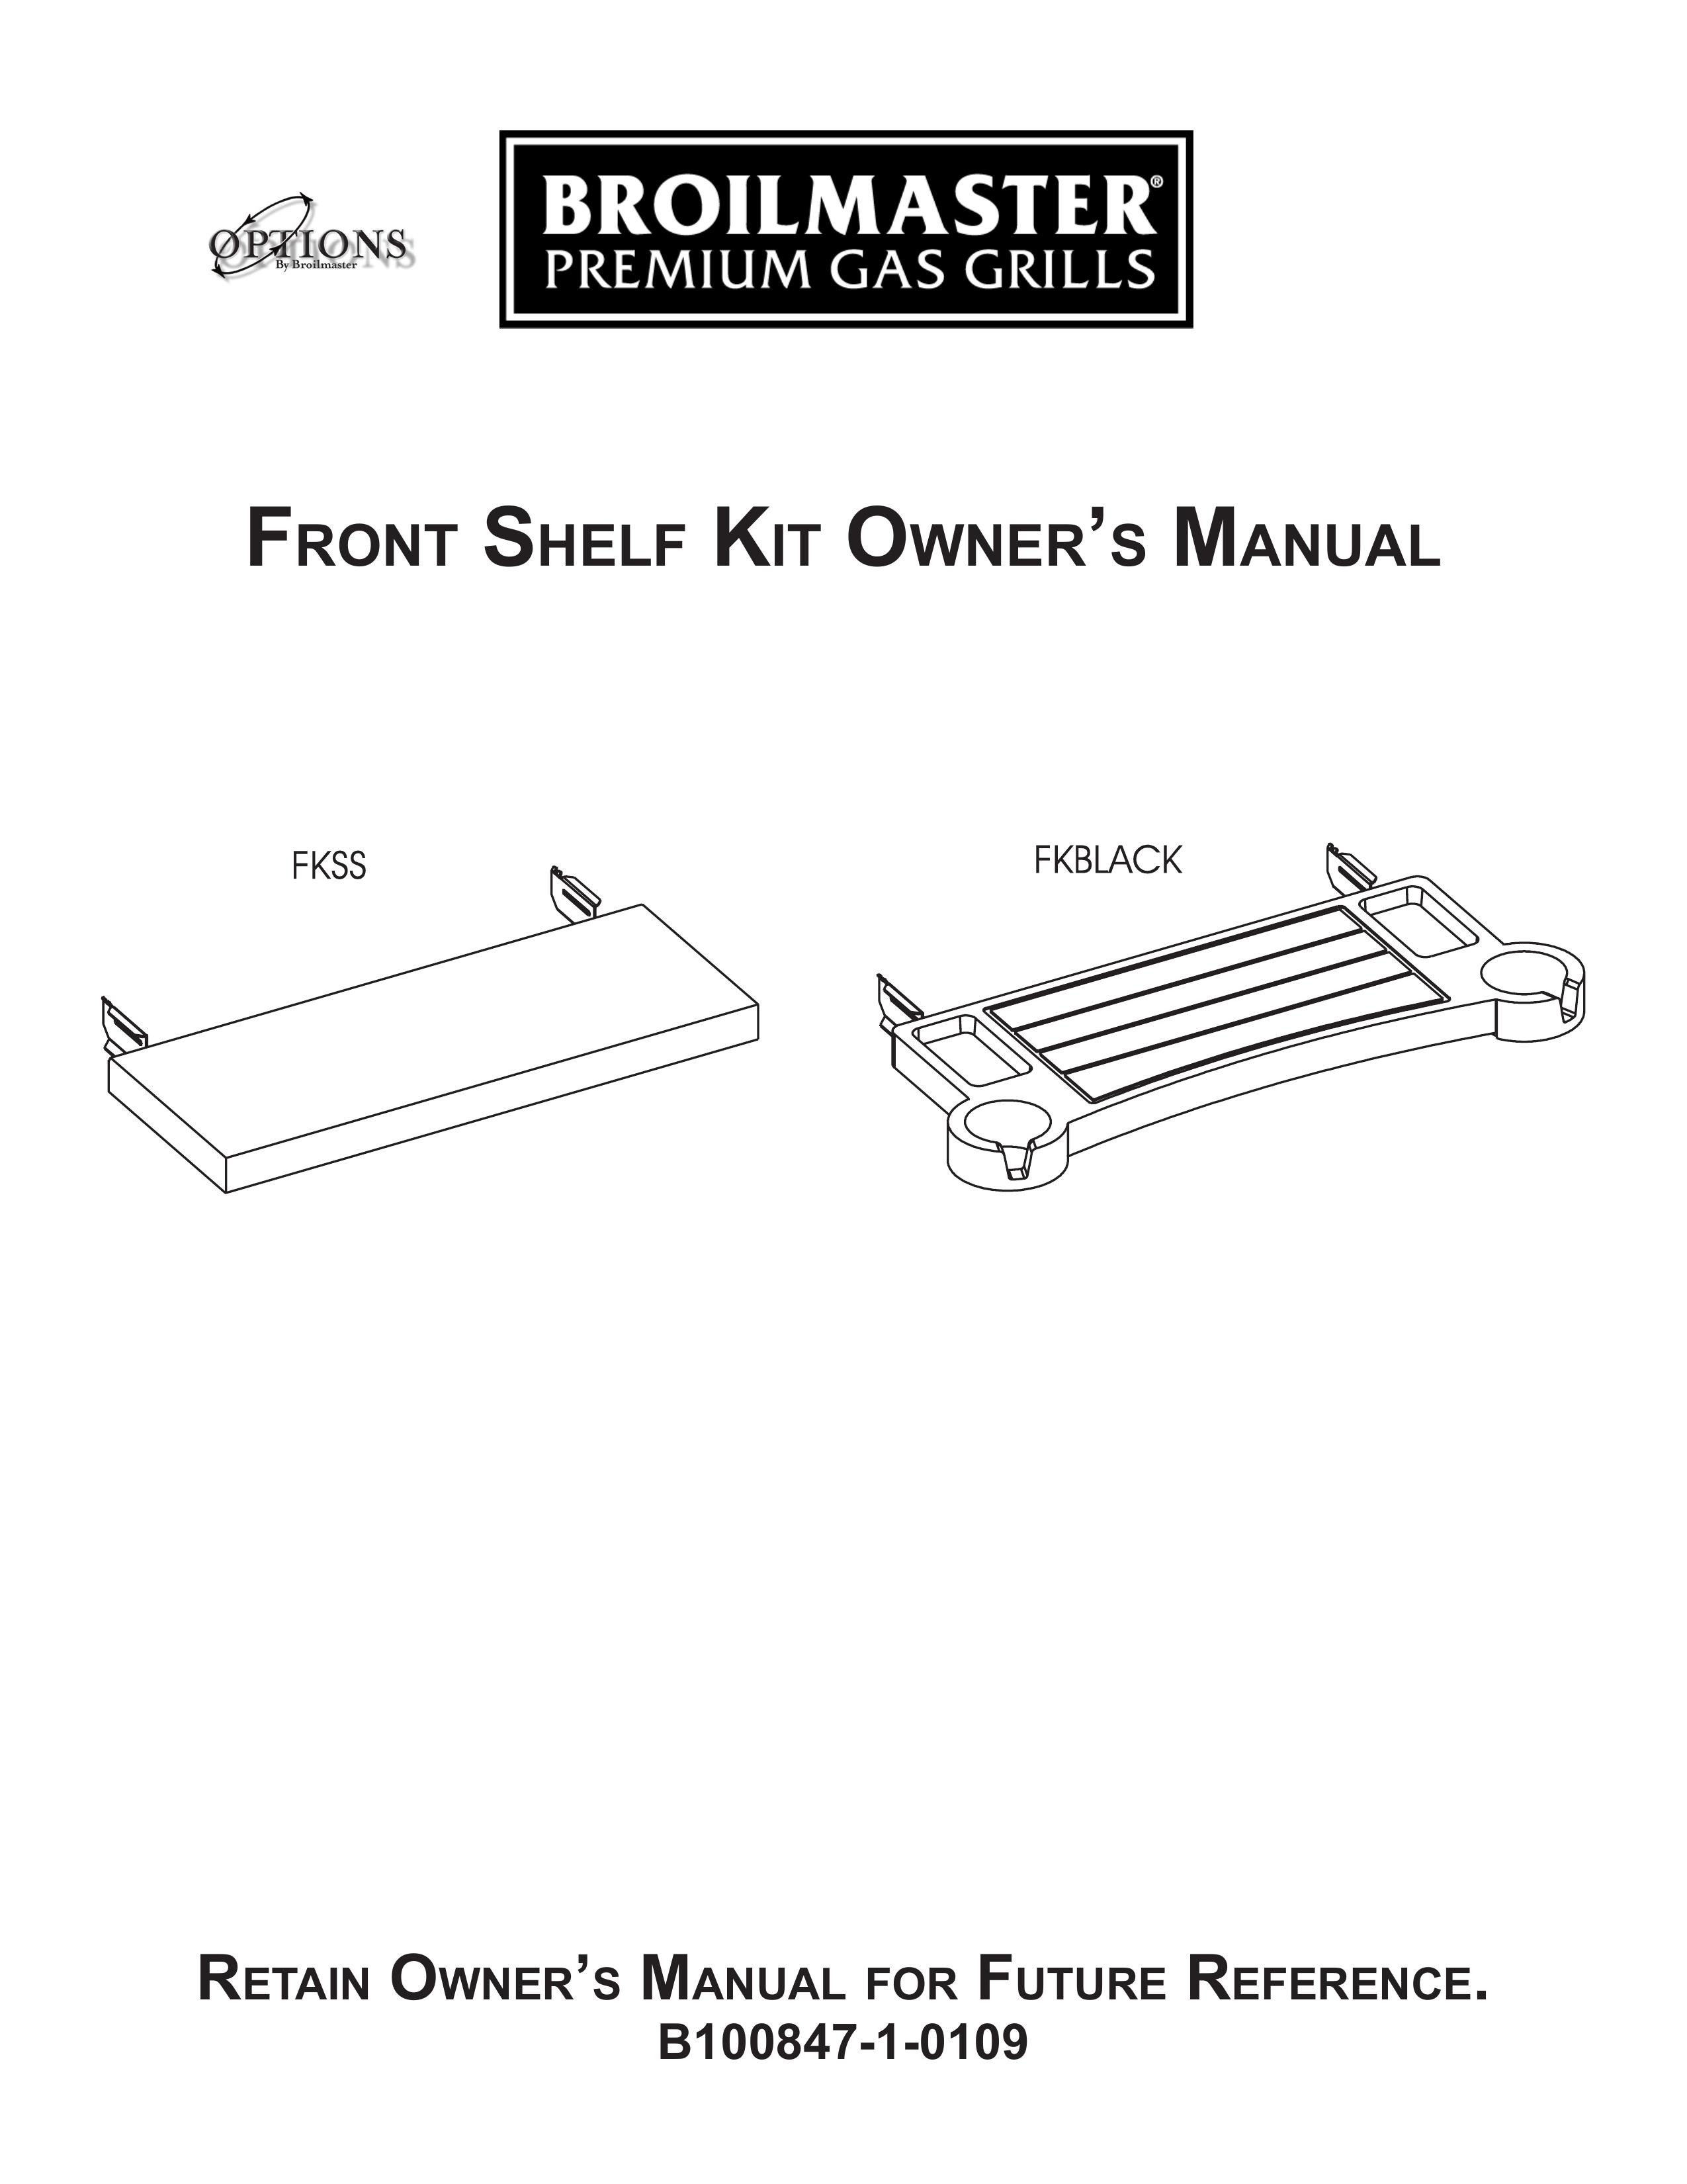 Broilmaster B100847-1-0109 Gas Grill User Manual